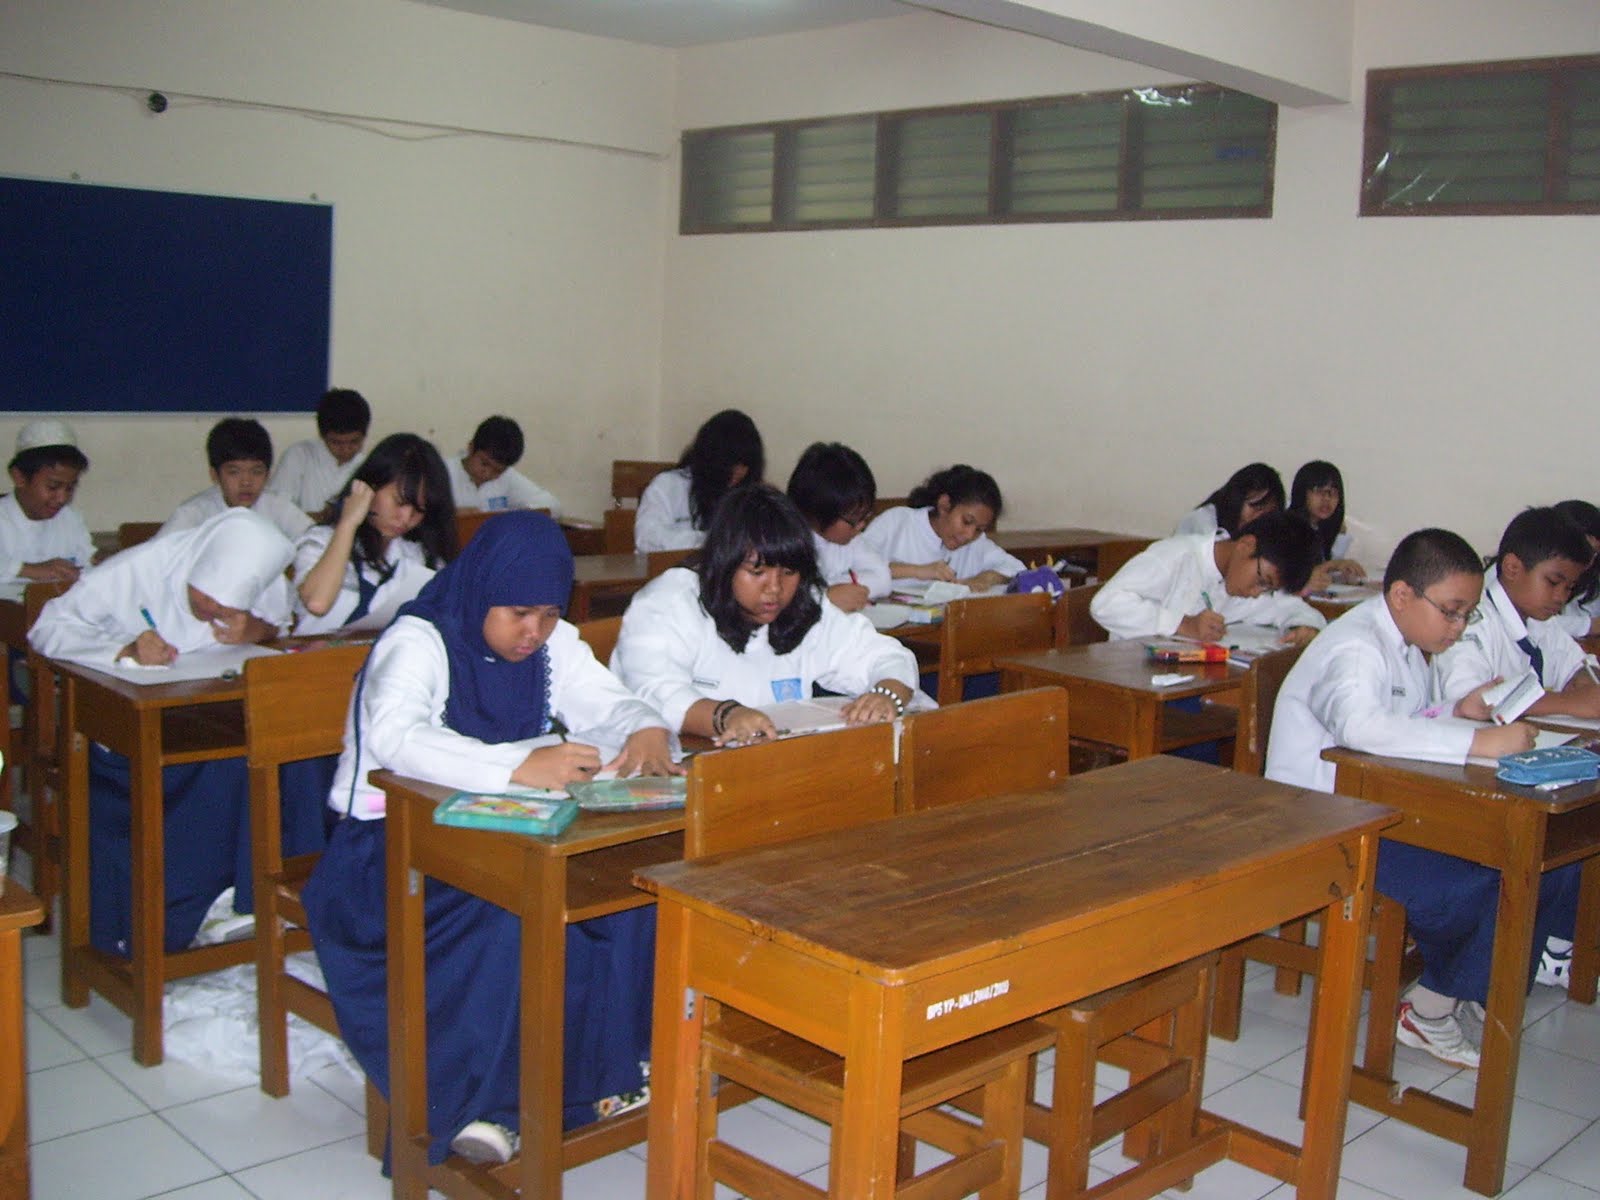 SMP Labschool Jakarta